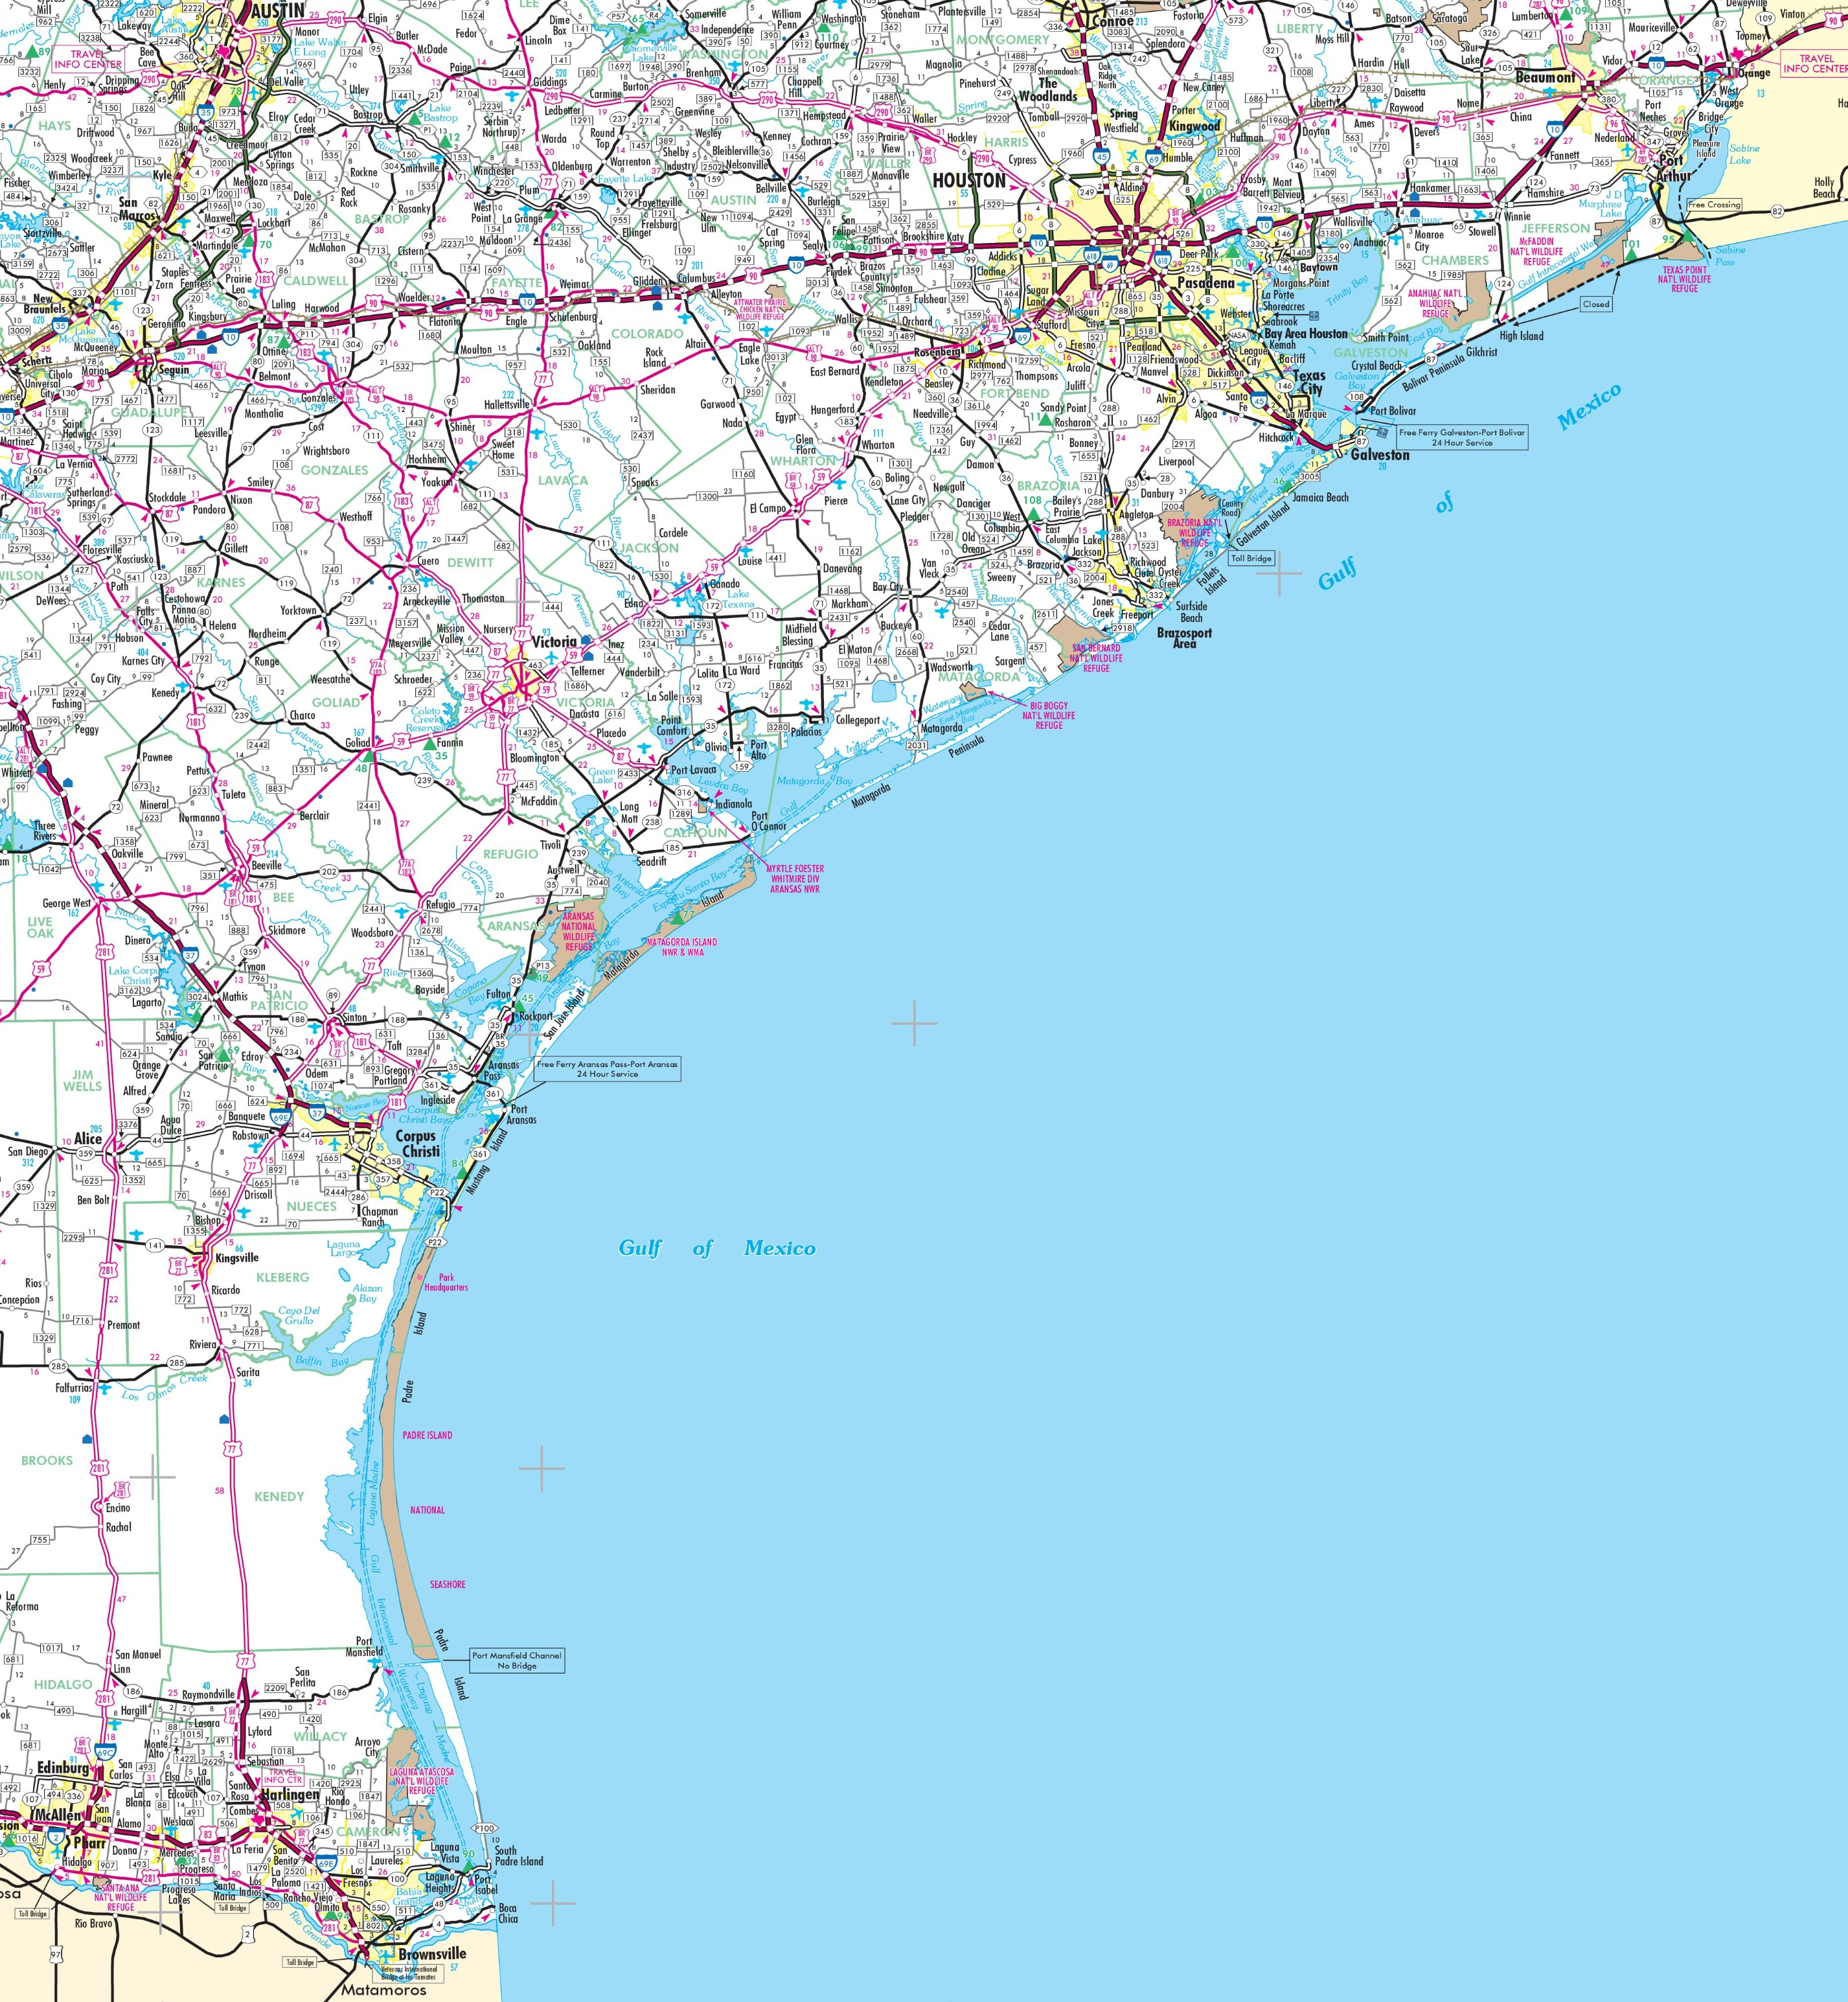 Texas Gulf Coast Maps And Travel Information | Download Free Texas - Texas Coastal Fishing Maps